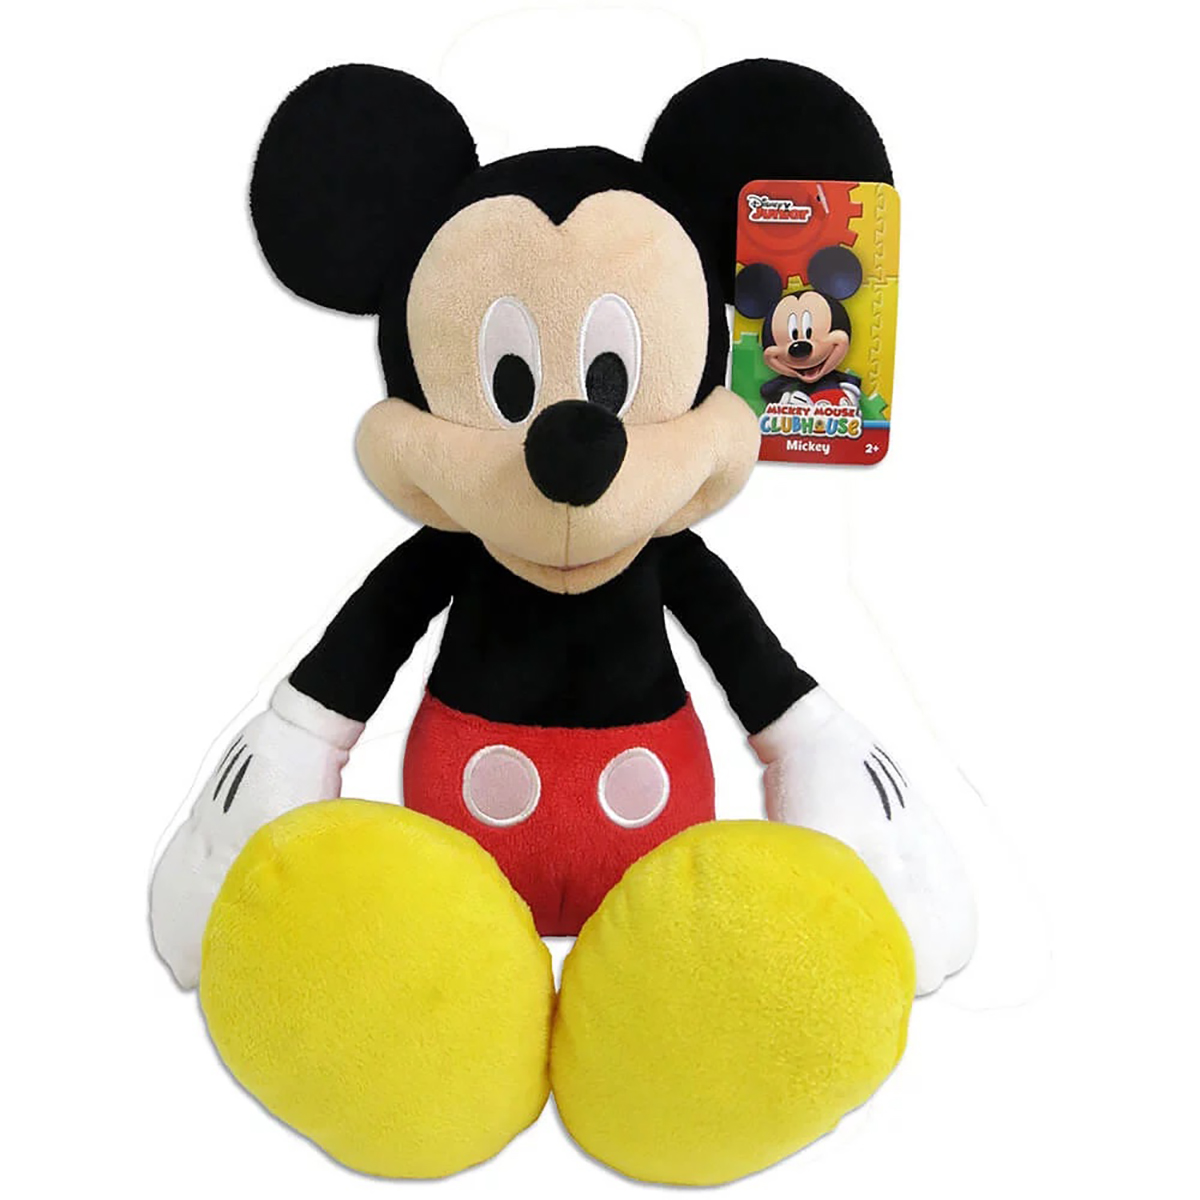 15in. Disney Classic Mickey Plush